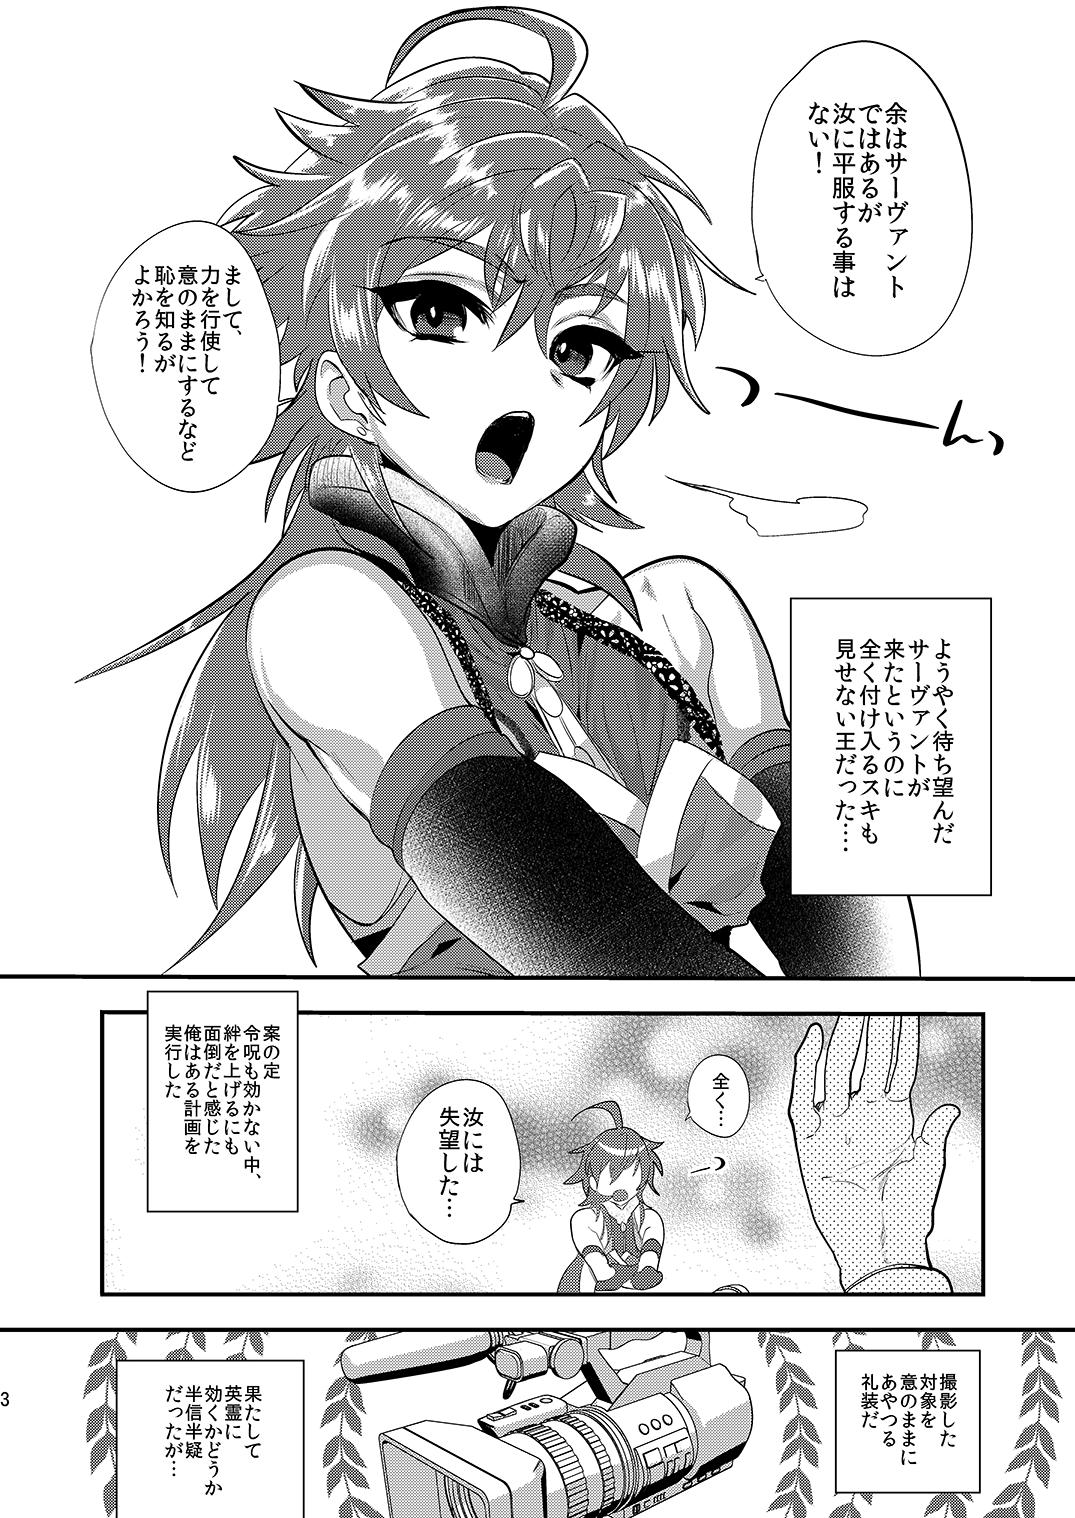 Bizarre Kizuna LV0 no raama ou to himitsuno omajinai - Fate grand order Exgirlfriend - Page 3